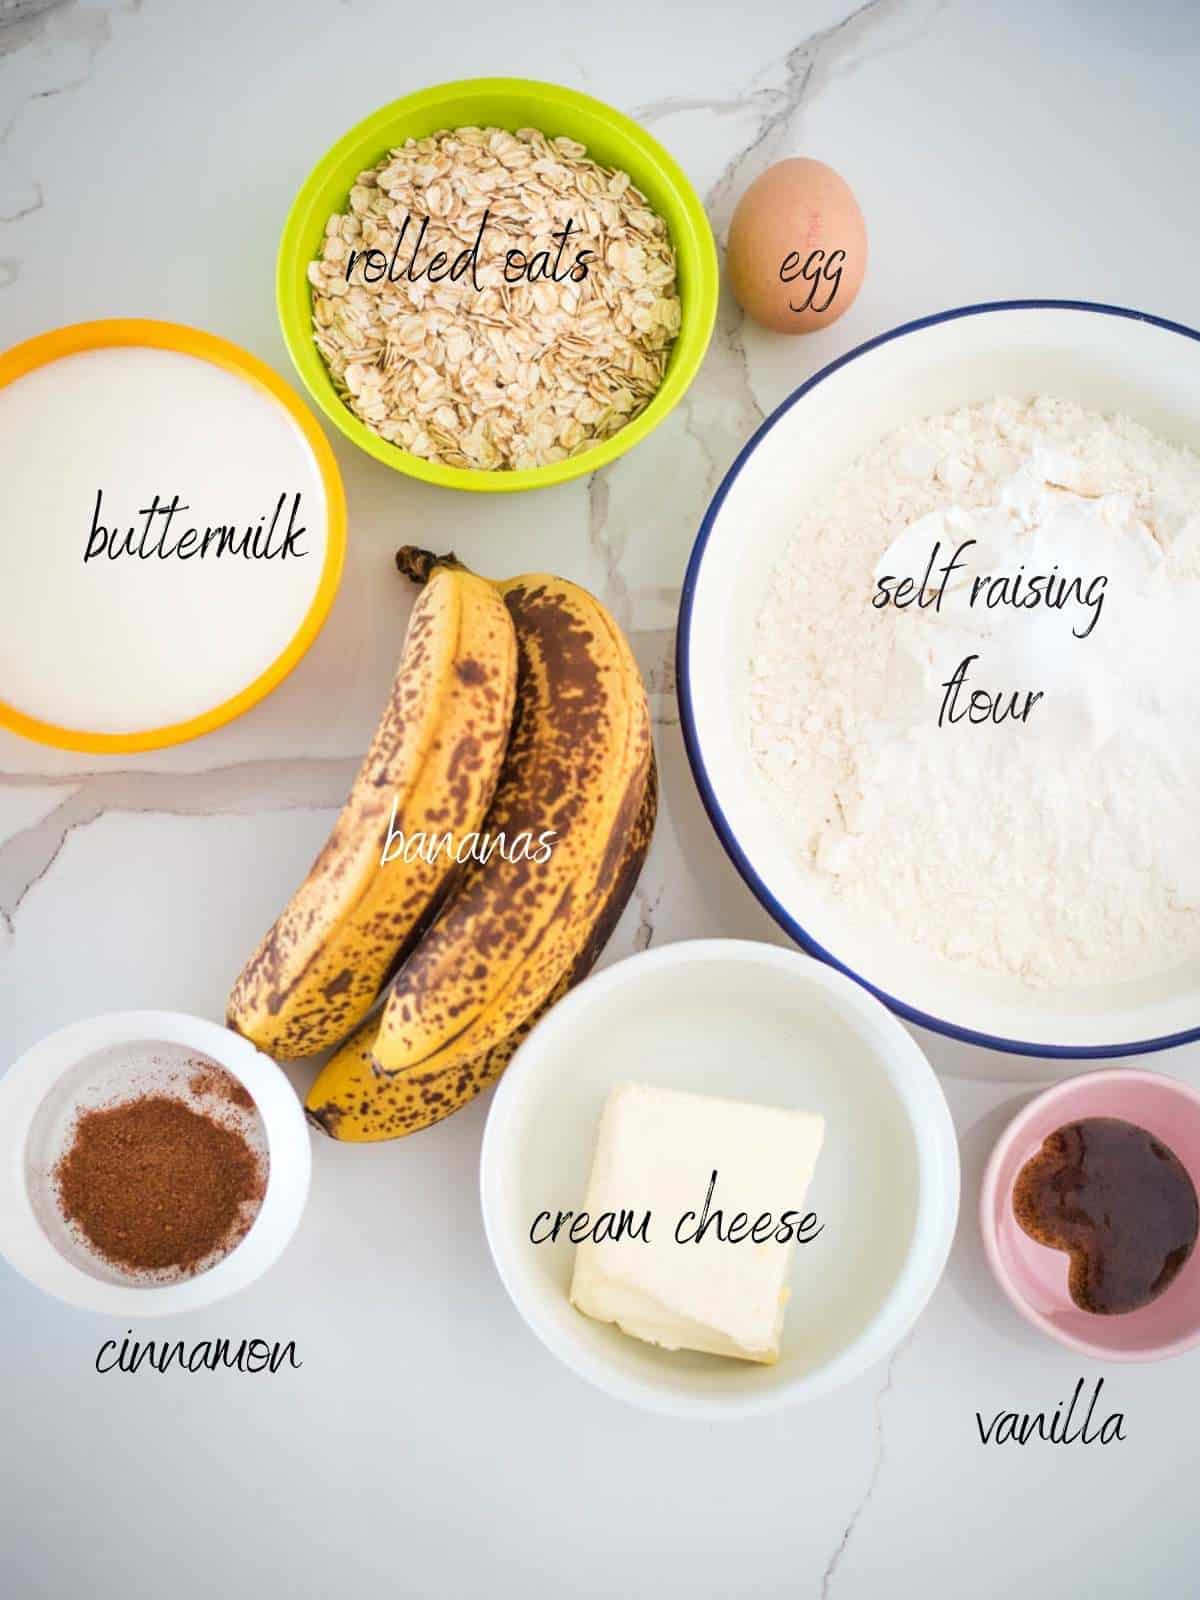 ingredients: bananaa, buttermilk, cream cheese, self raising flour, vanilla, egg, cinnamon